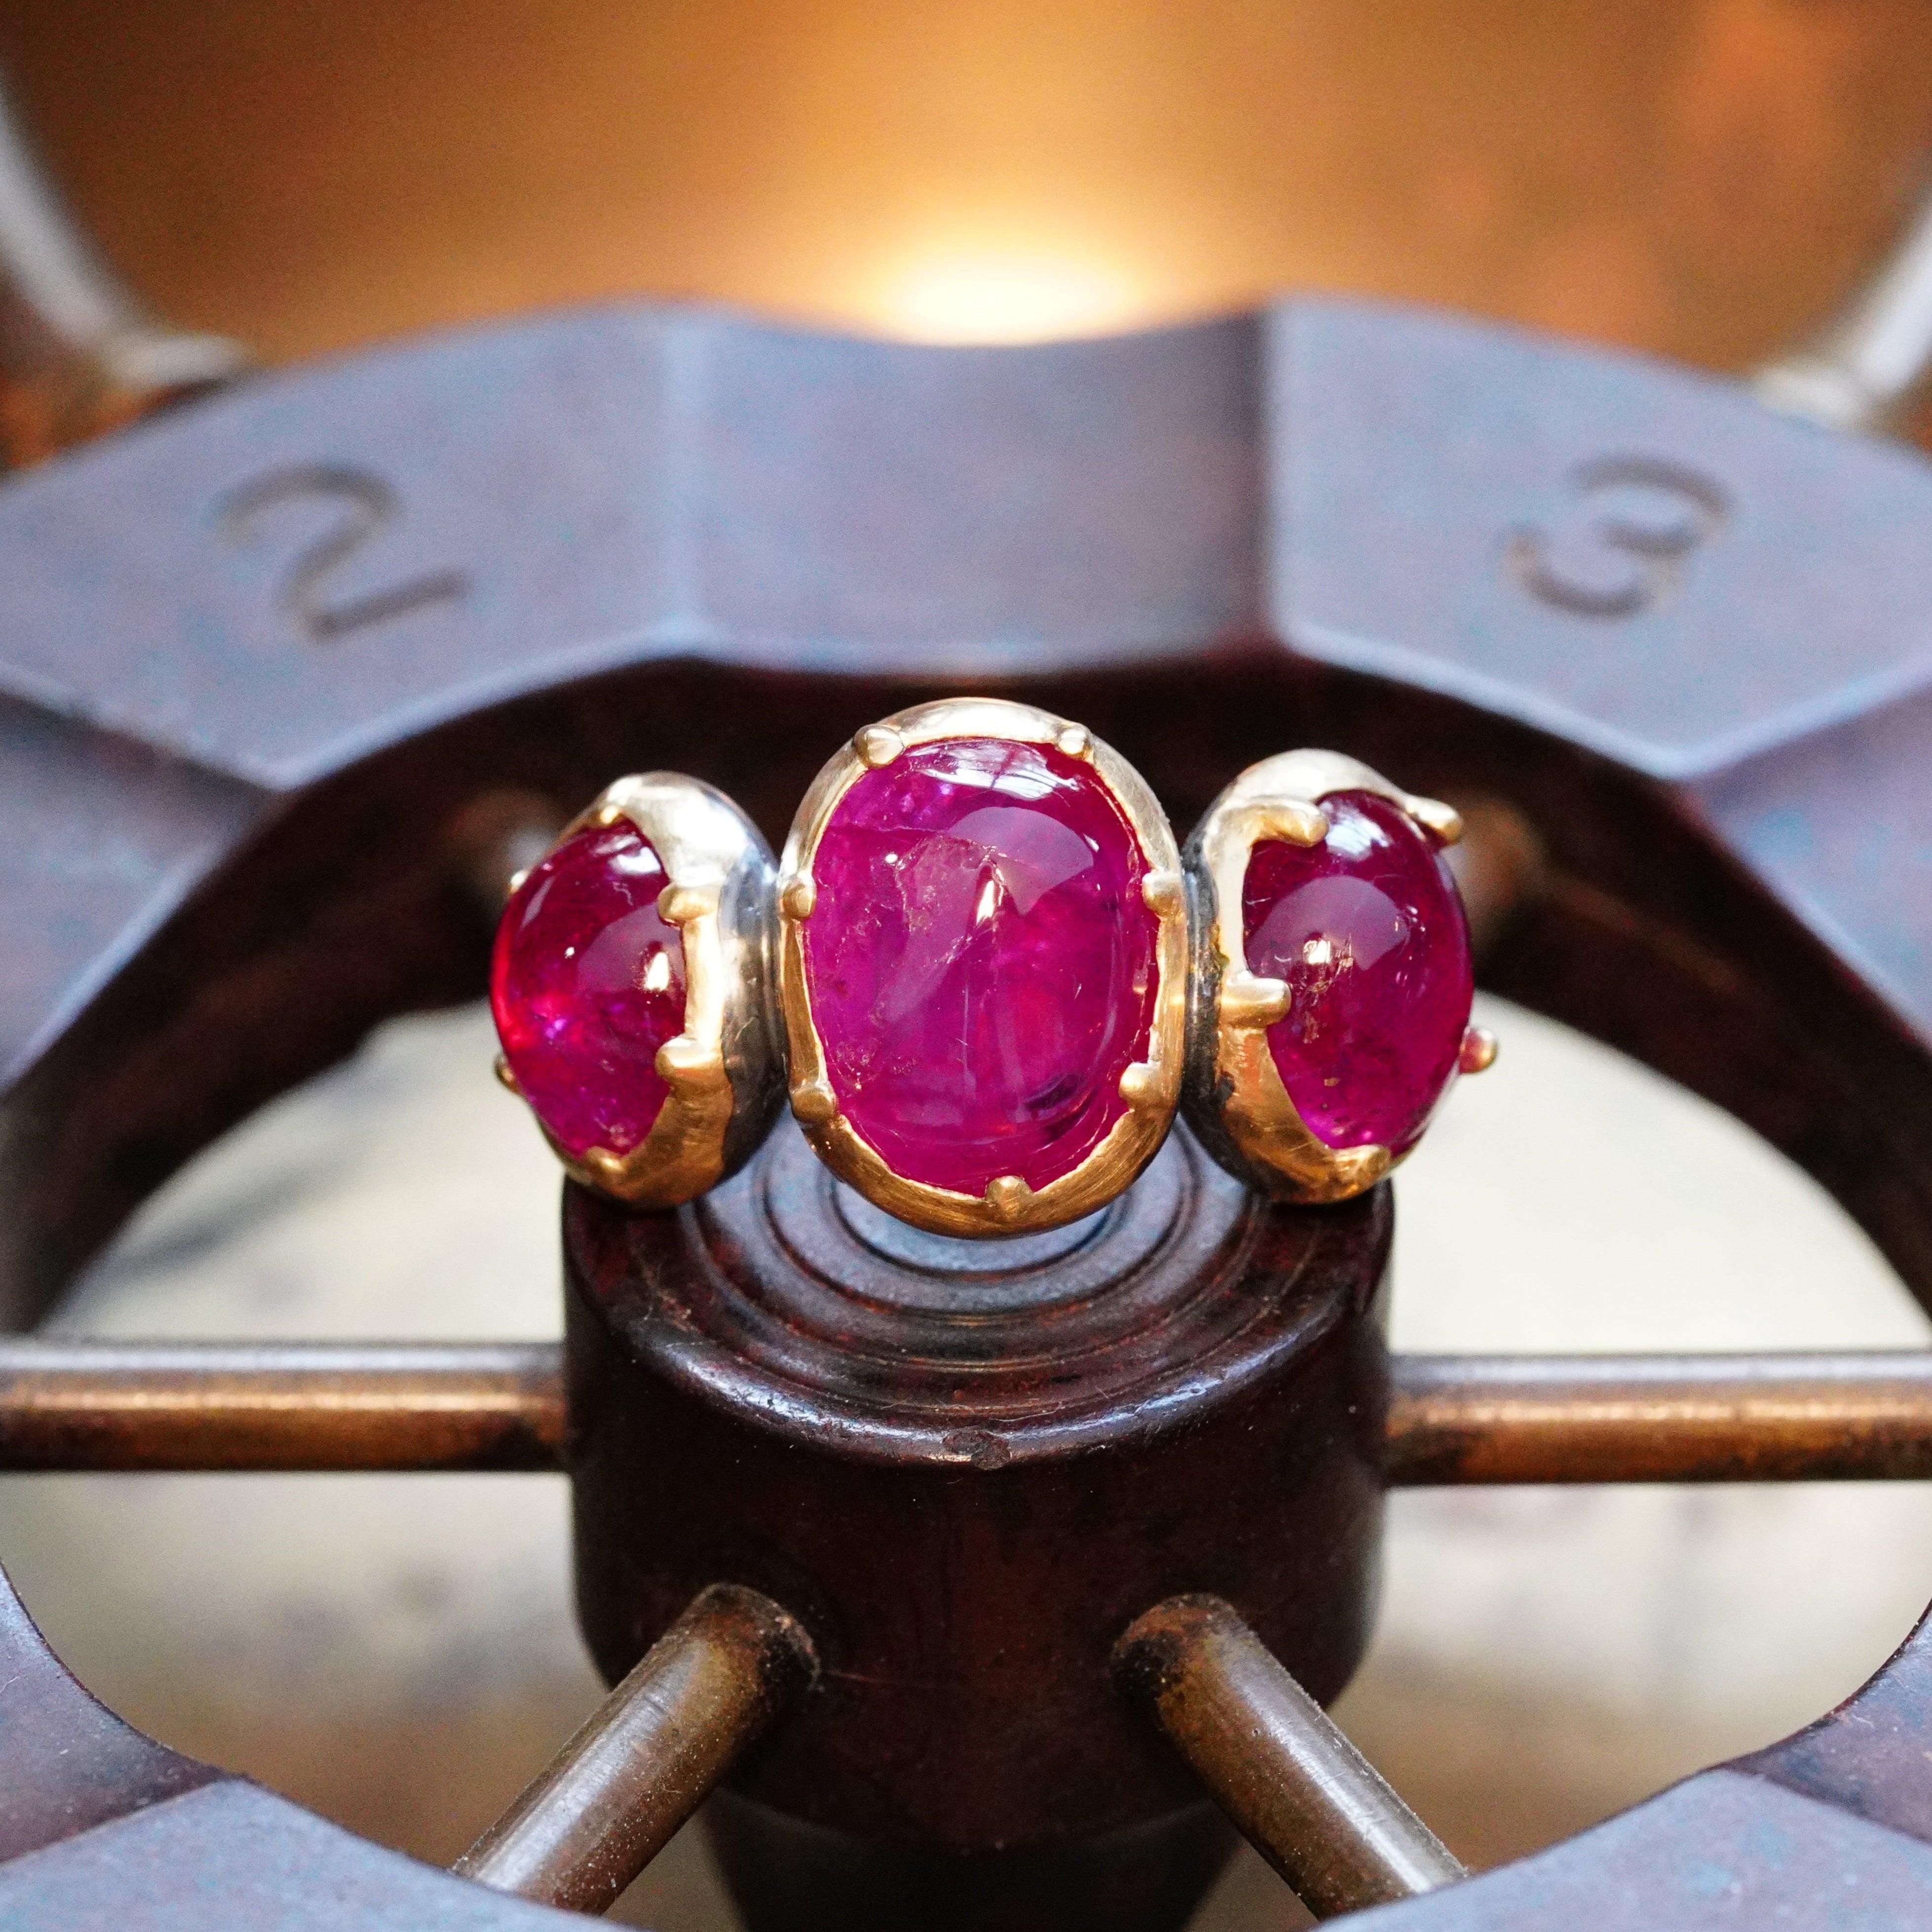 Victorian-Inspired Three-Stone Burmese Ruby Ring by Jogani - Anup Jogani Design